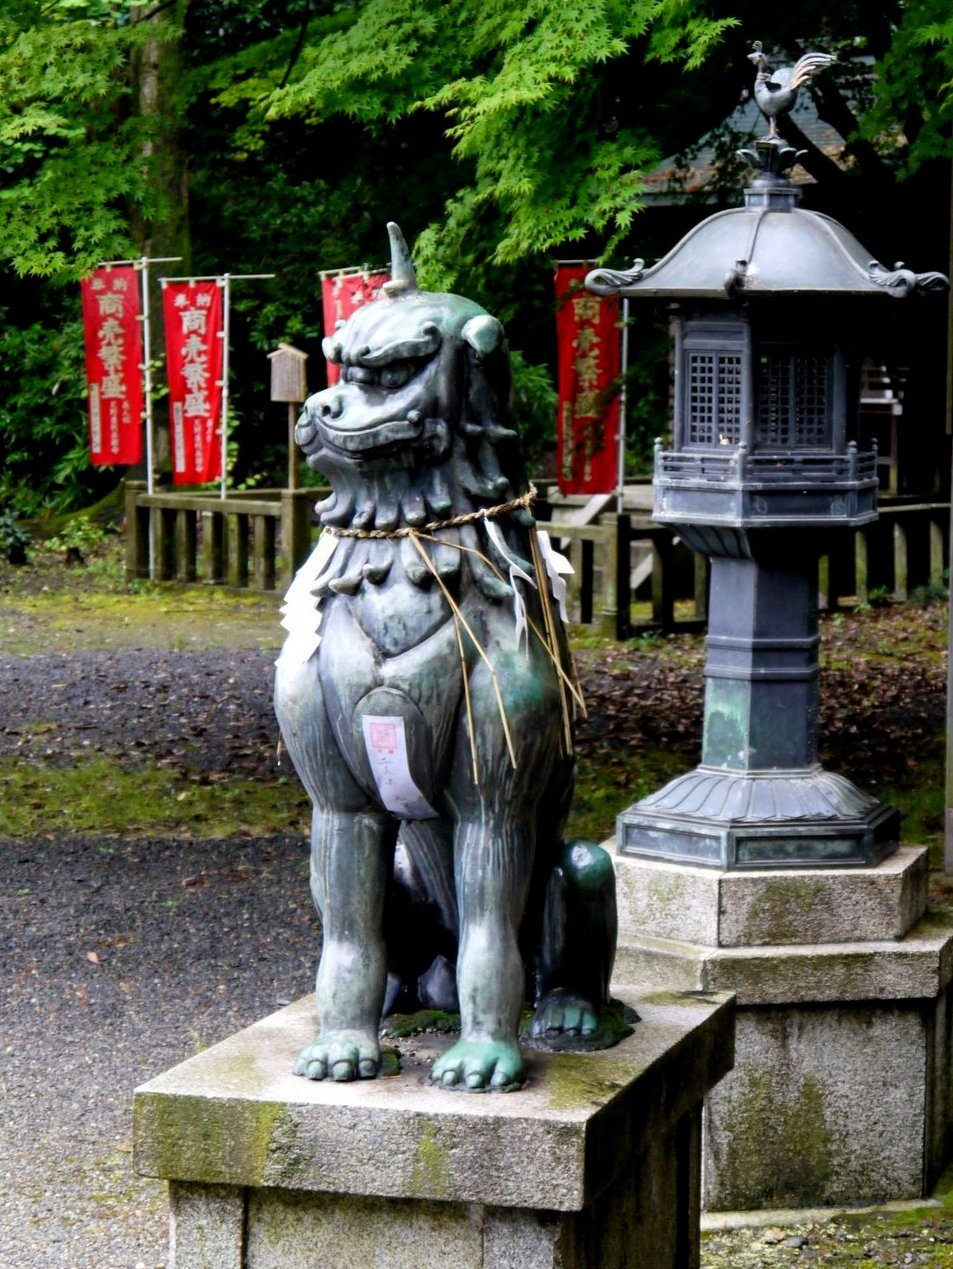 Statue of strange horned beast beside metal lantern